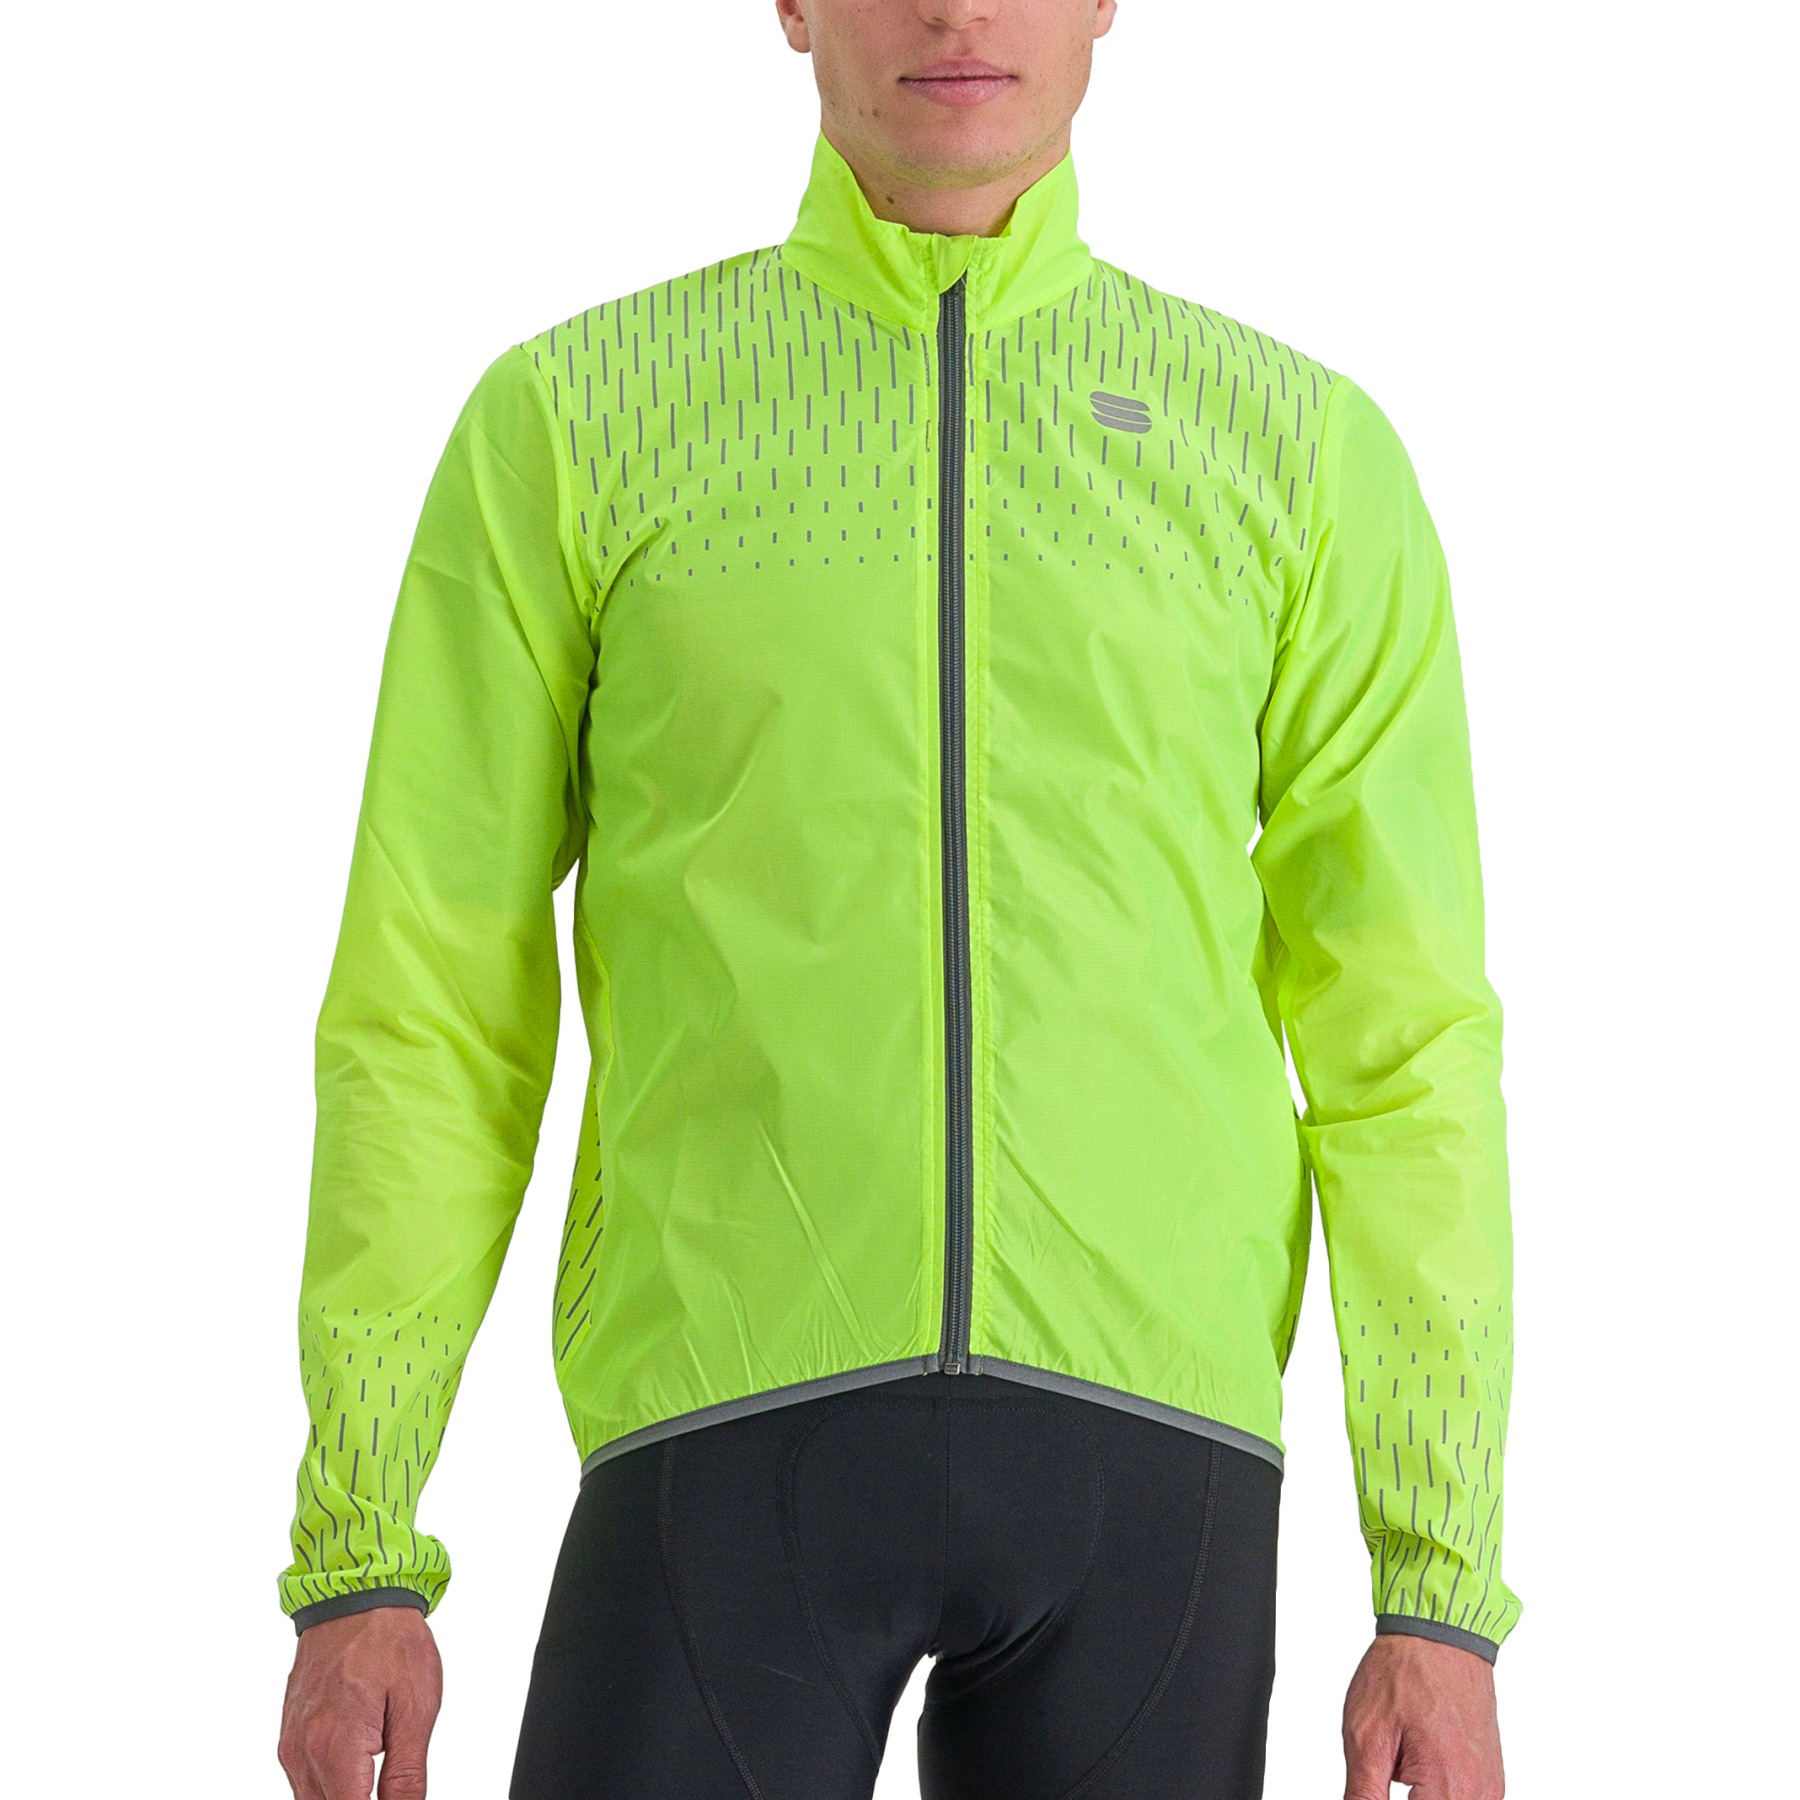 https://images.bike24.com/i/mb/92/fc/82/sportful-reflex-bike-jacket-091-yellow-fluo-1-1468907.jpg